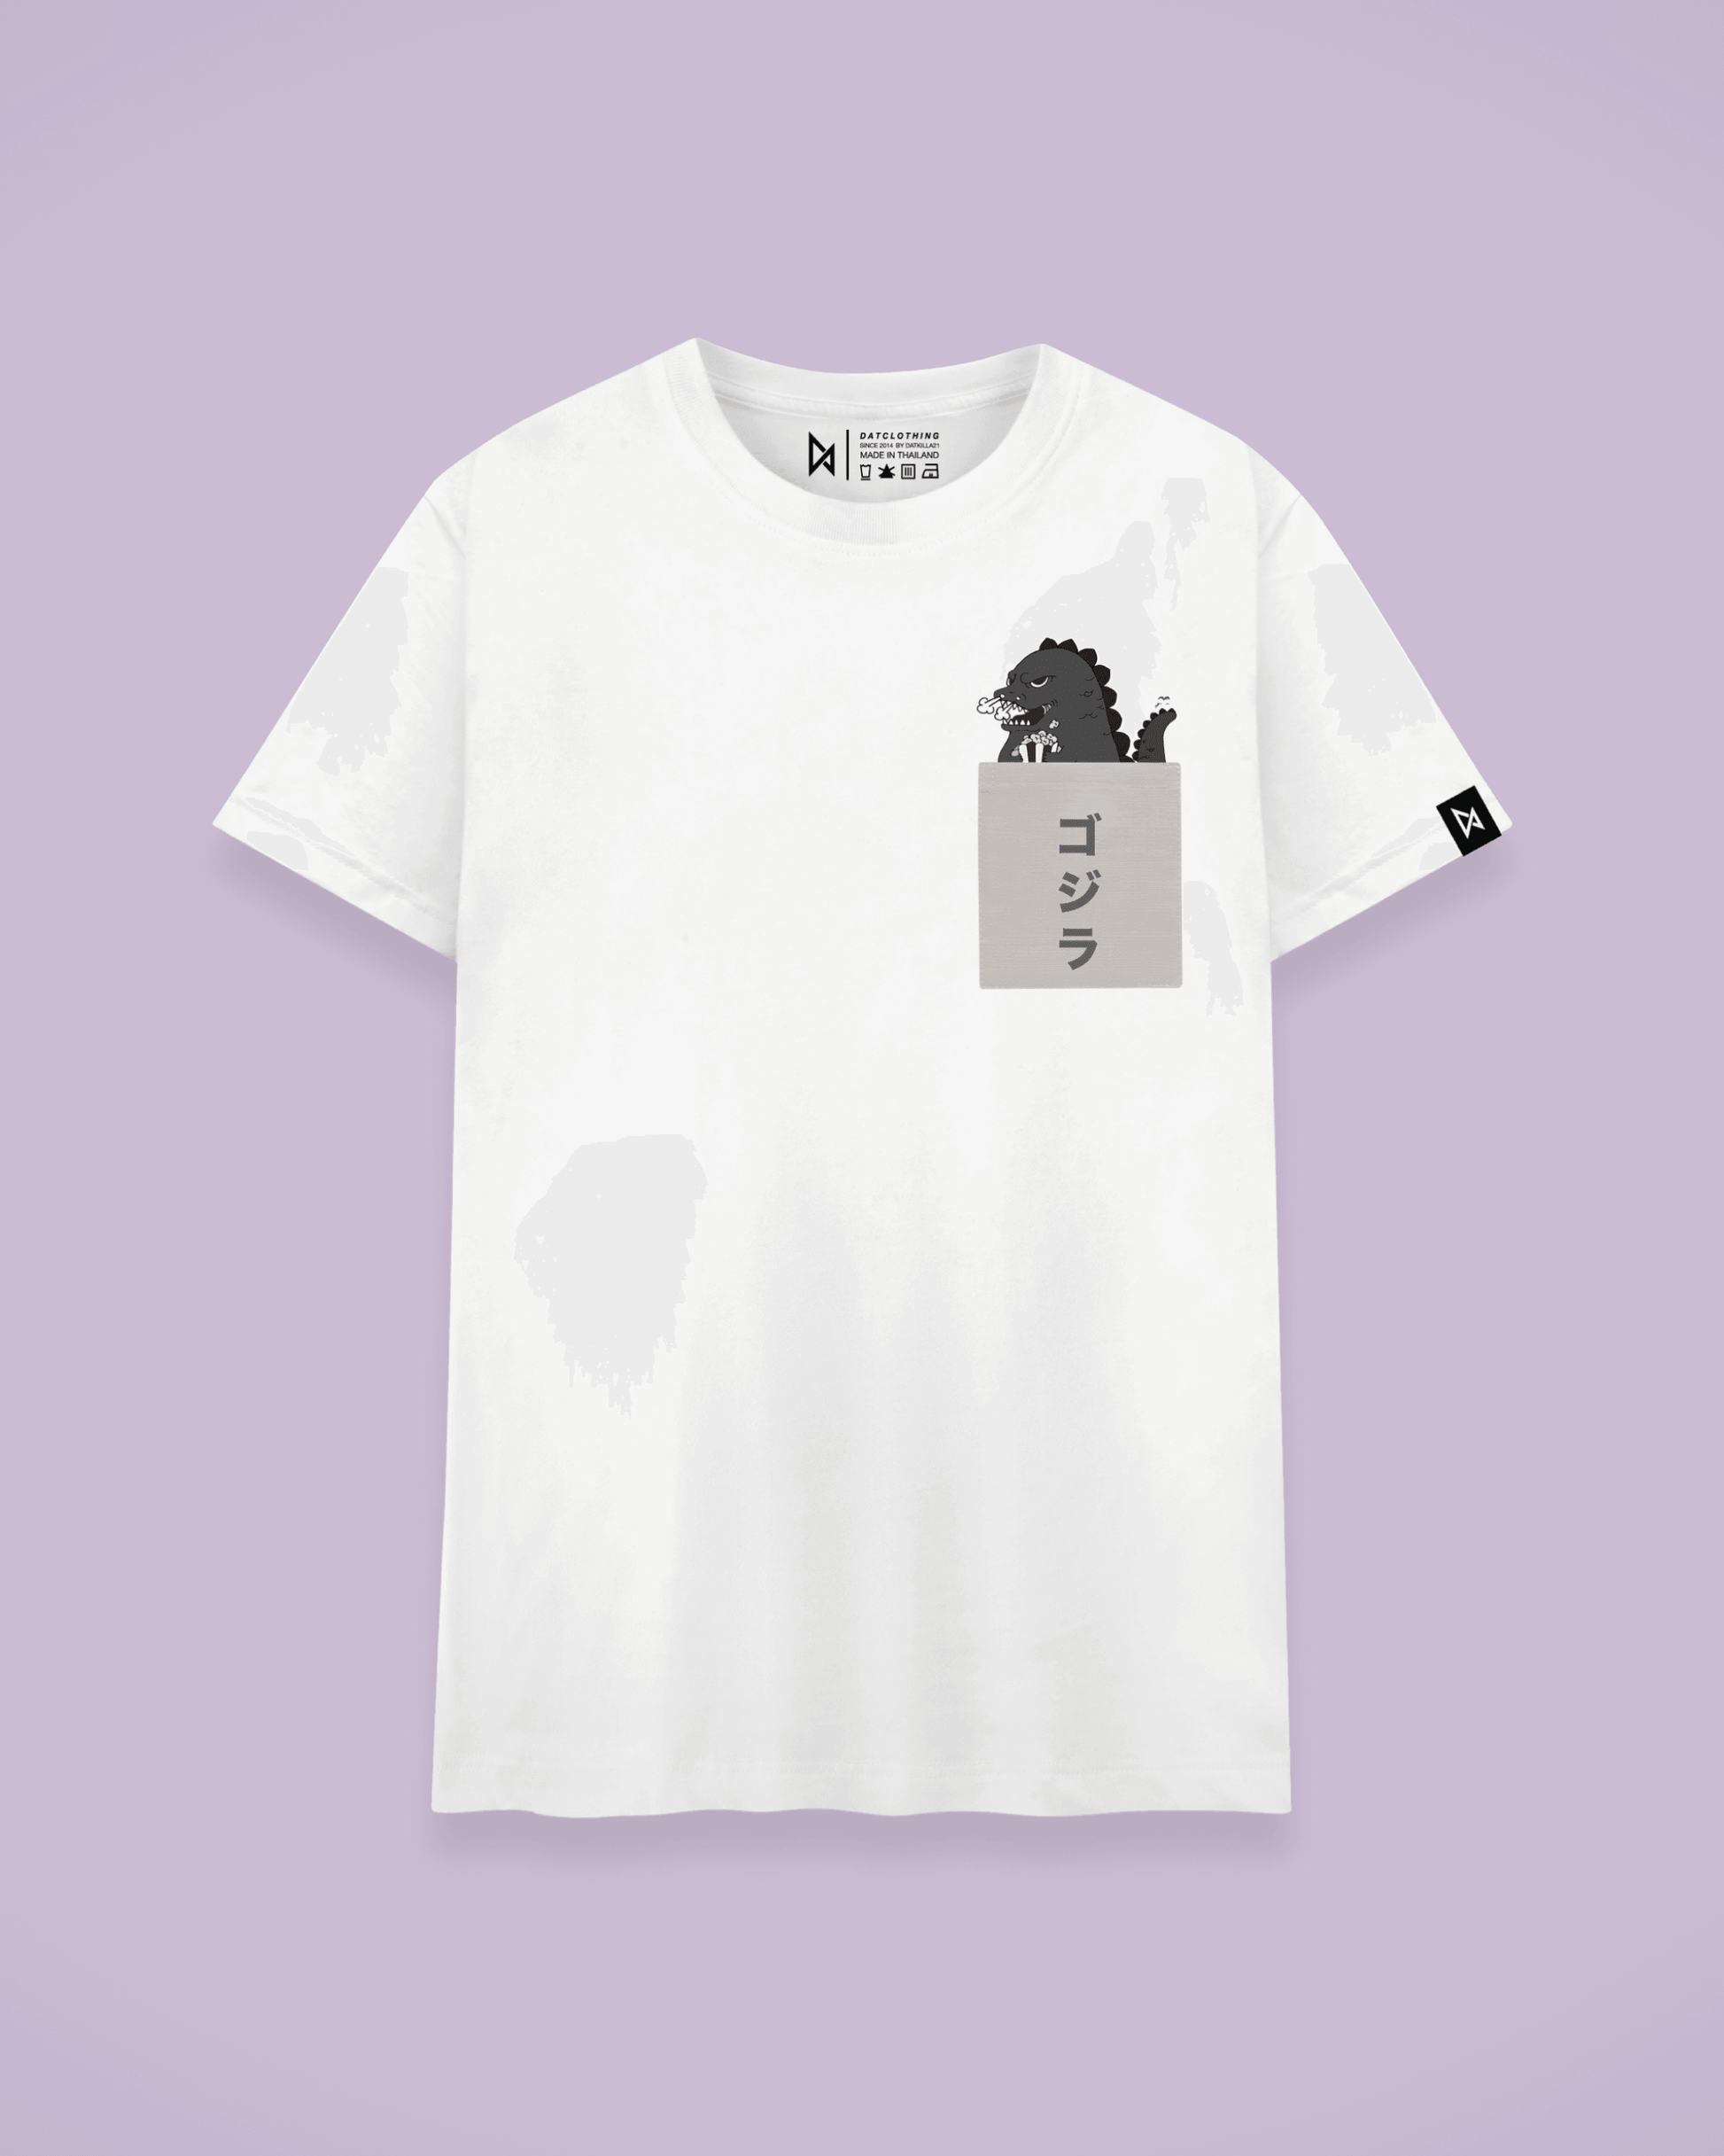 Datclothing - White T-Shirt with Godzilla eating popcorn print and pocket